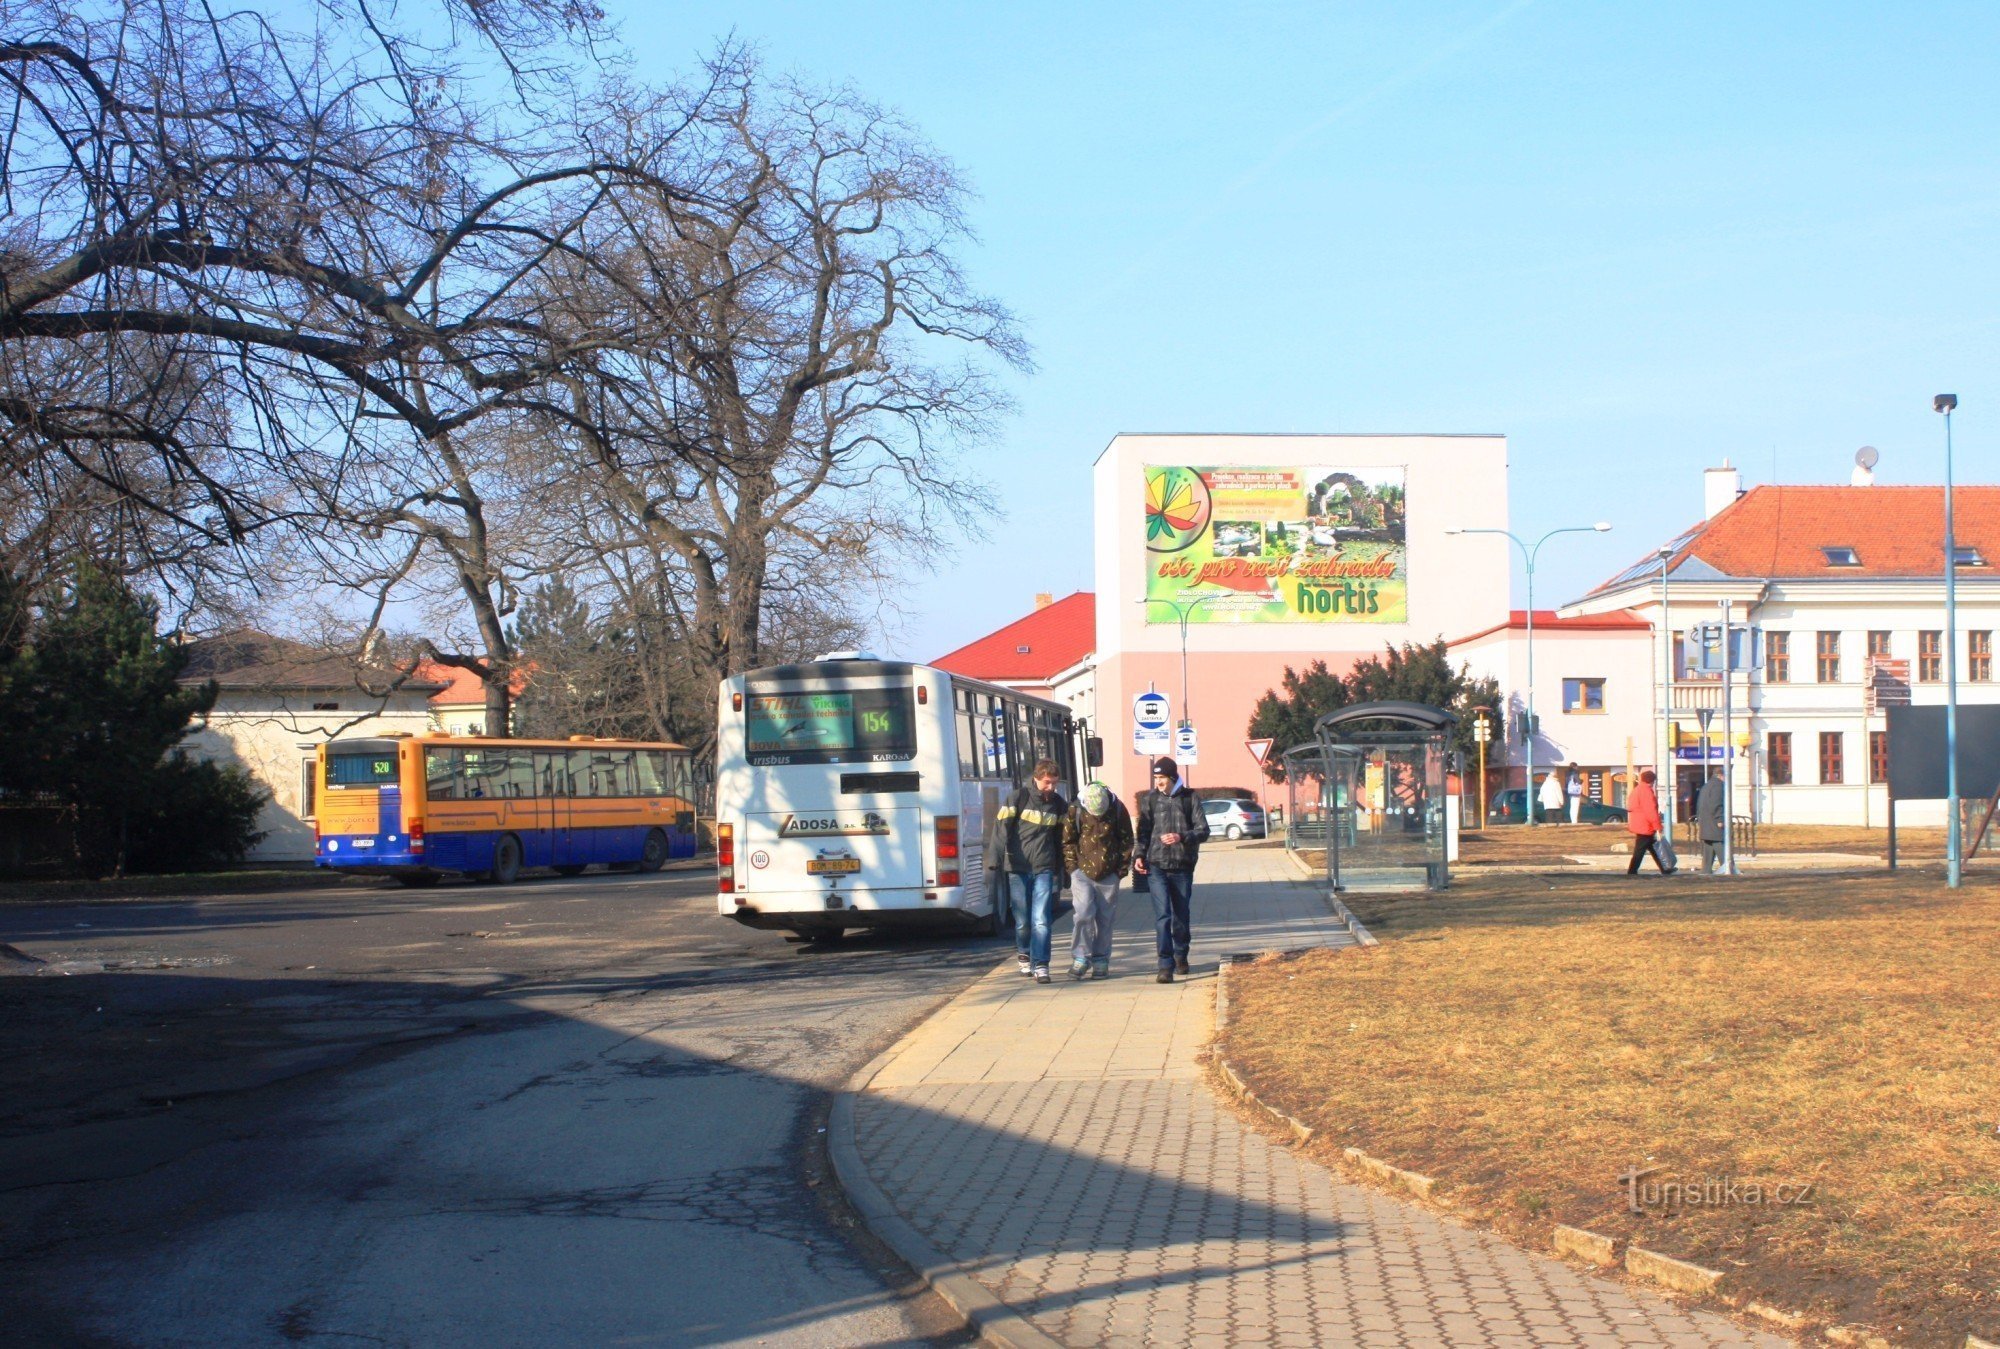 Busstationen ligger i utkanten av slottsparken